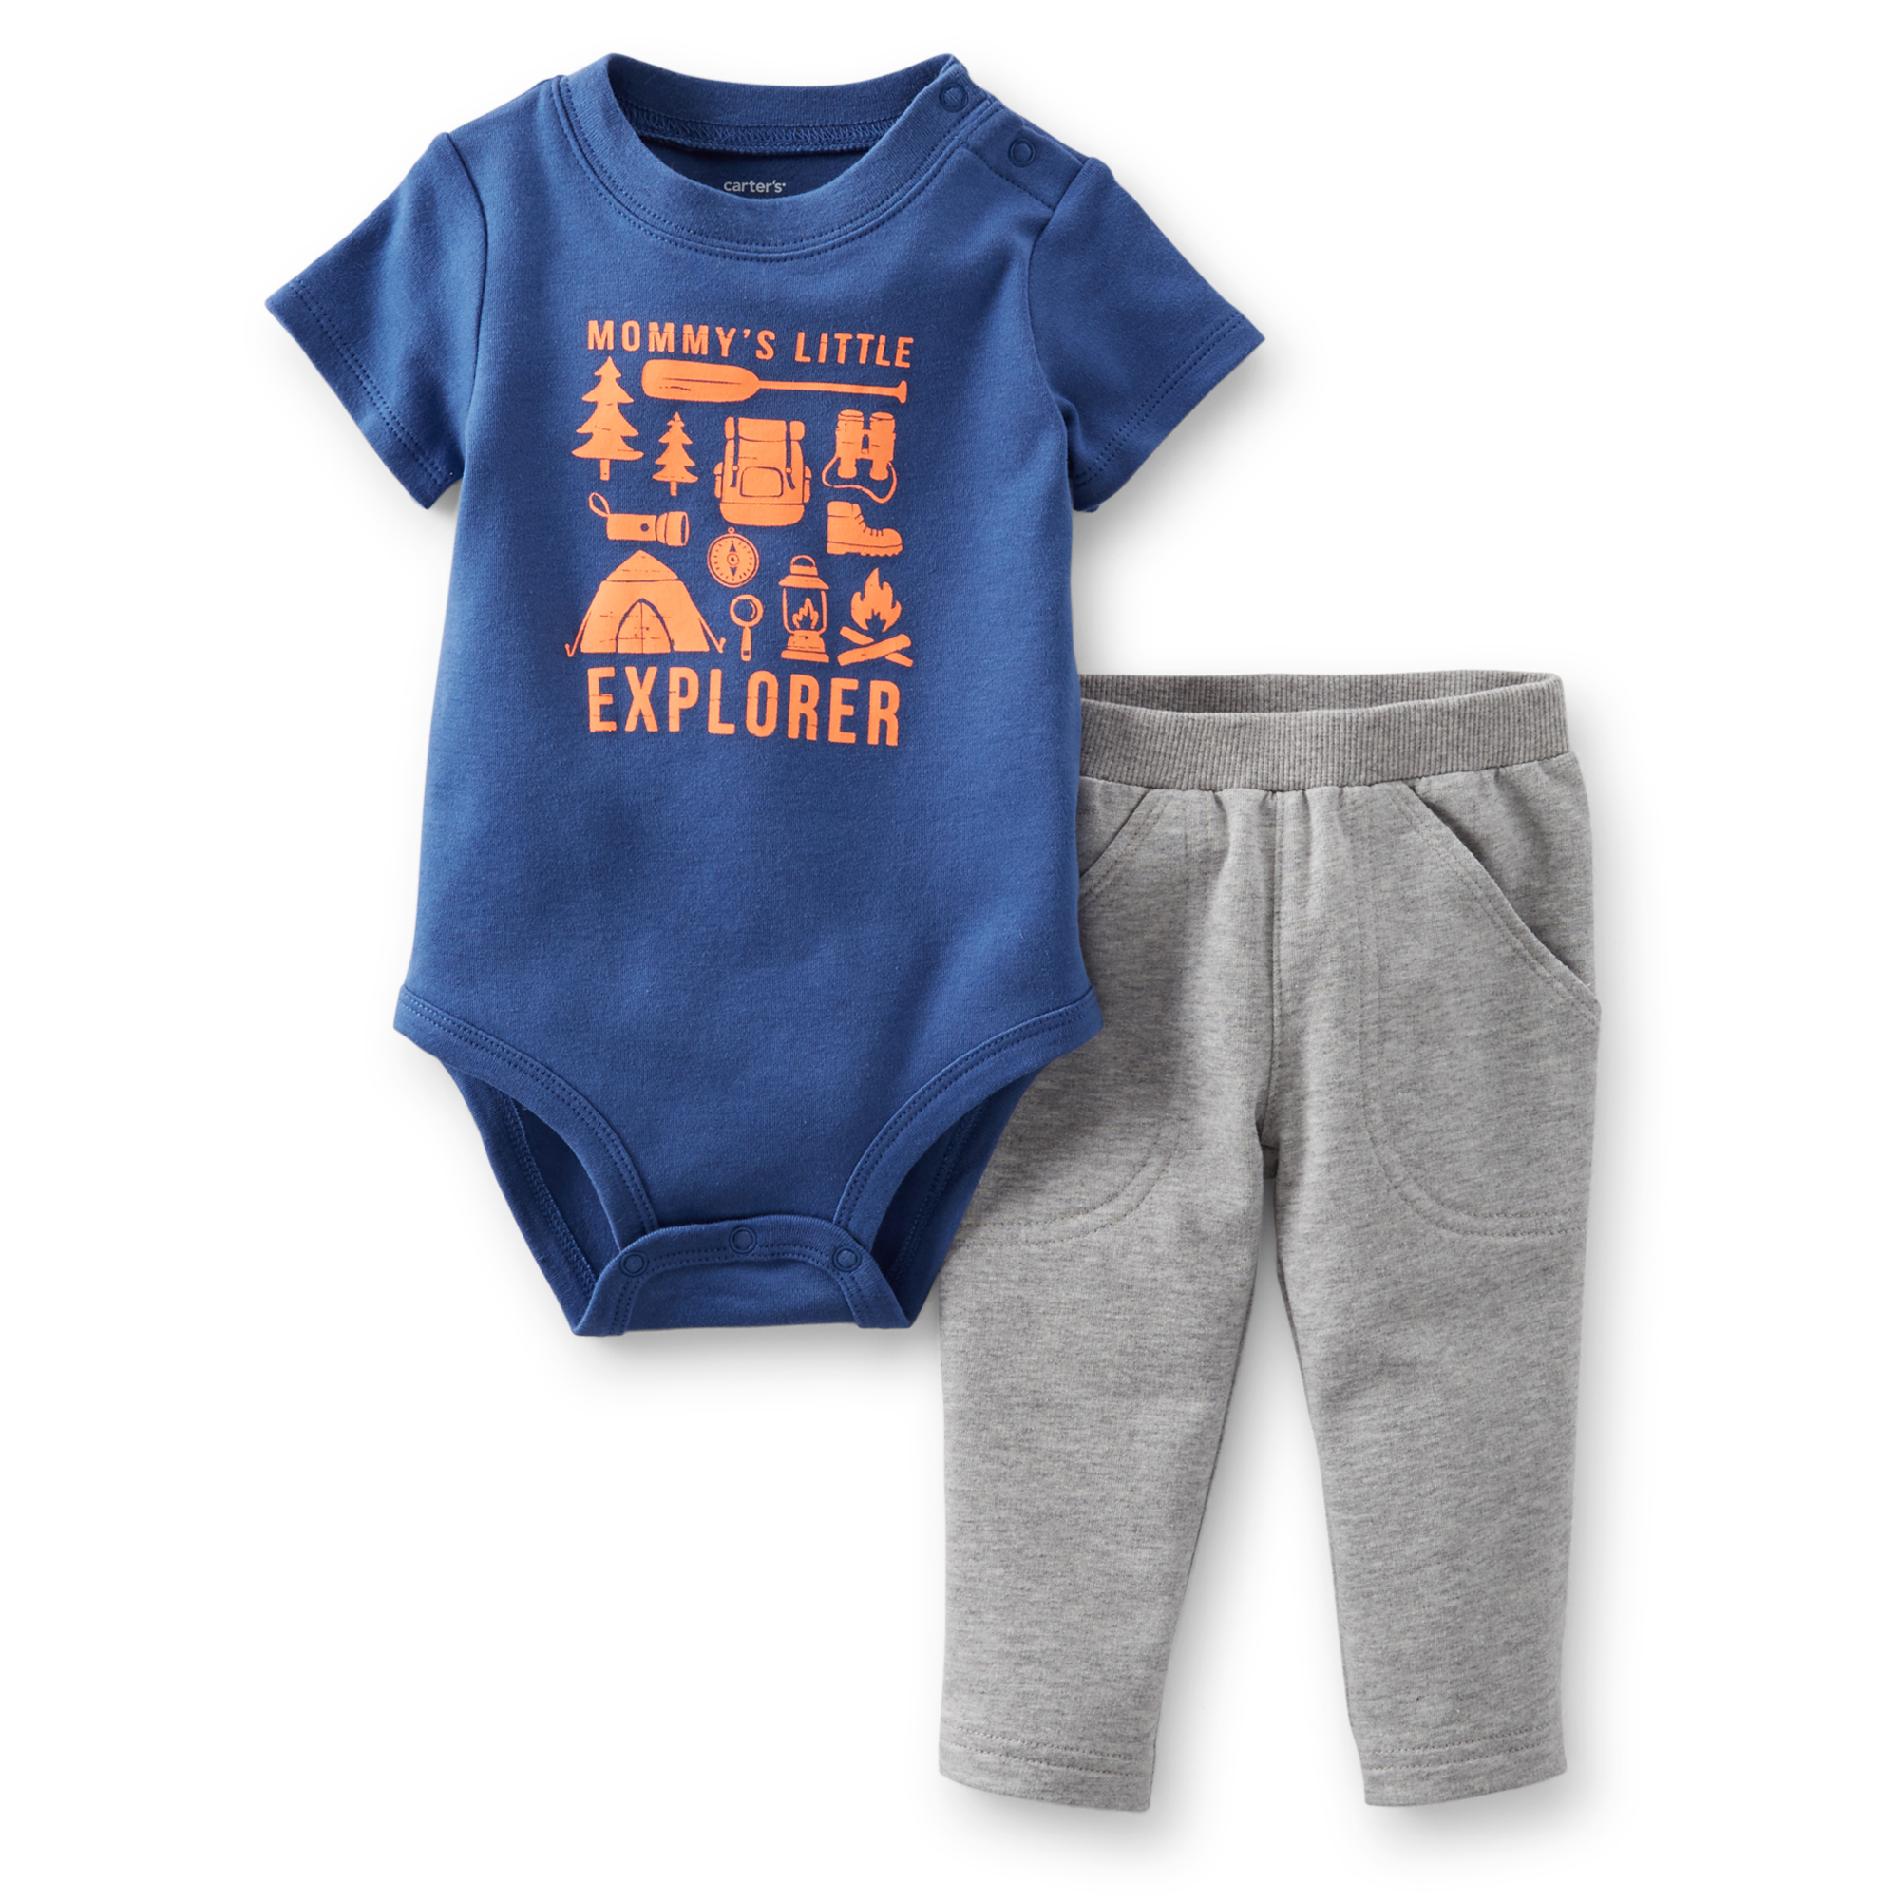 Carter's Newborn & Infant Boy's Bodysuit & Sweatpants - Mommy's Little Explorer